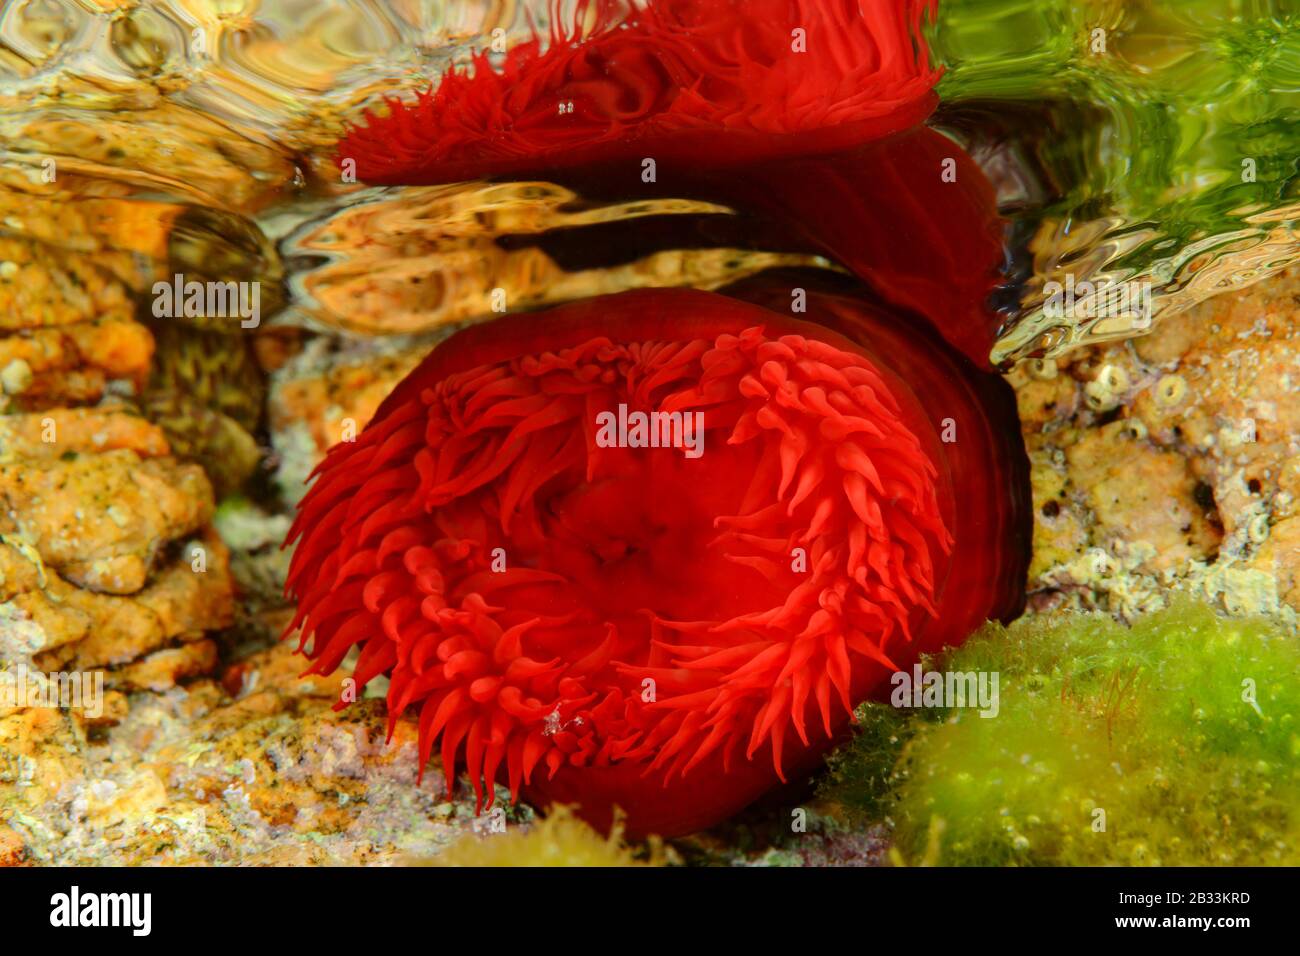 Beadlet anemone, Actinia equina, reflecting on the water surface, Tamariu, Costa Brava, Spain, Mediterranean Sea Stock Photo